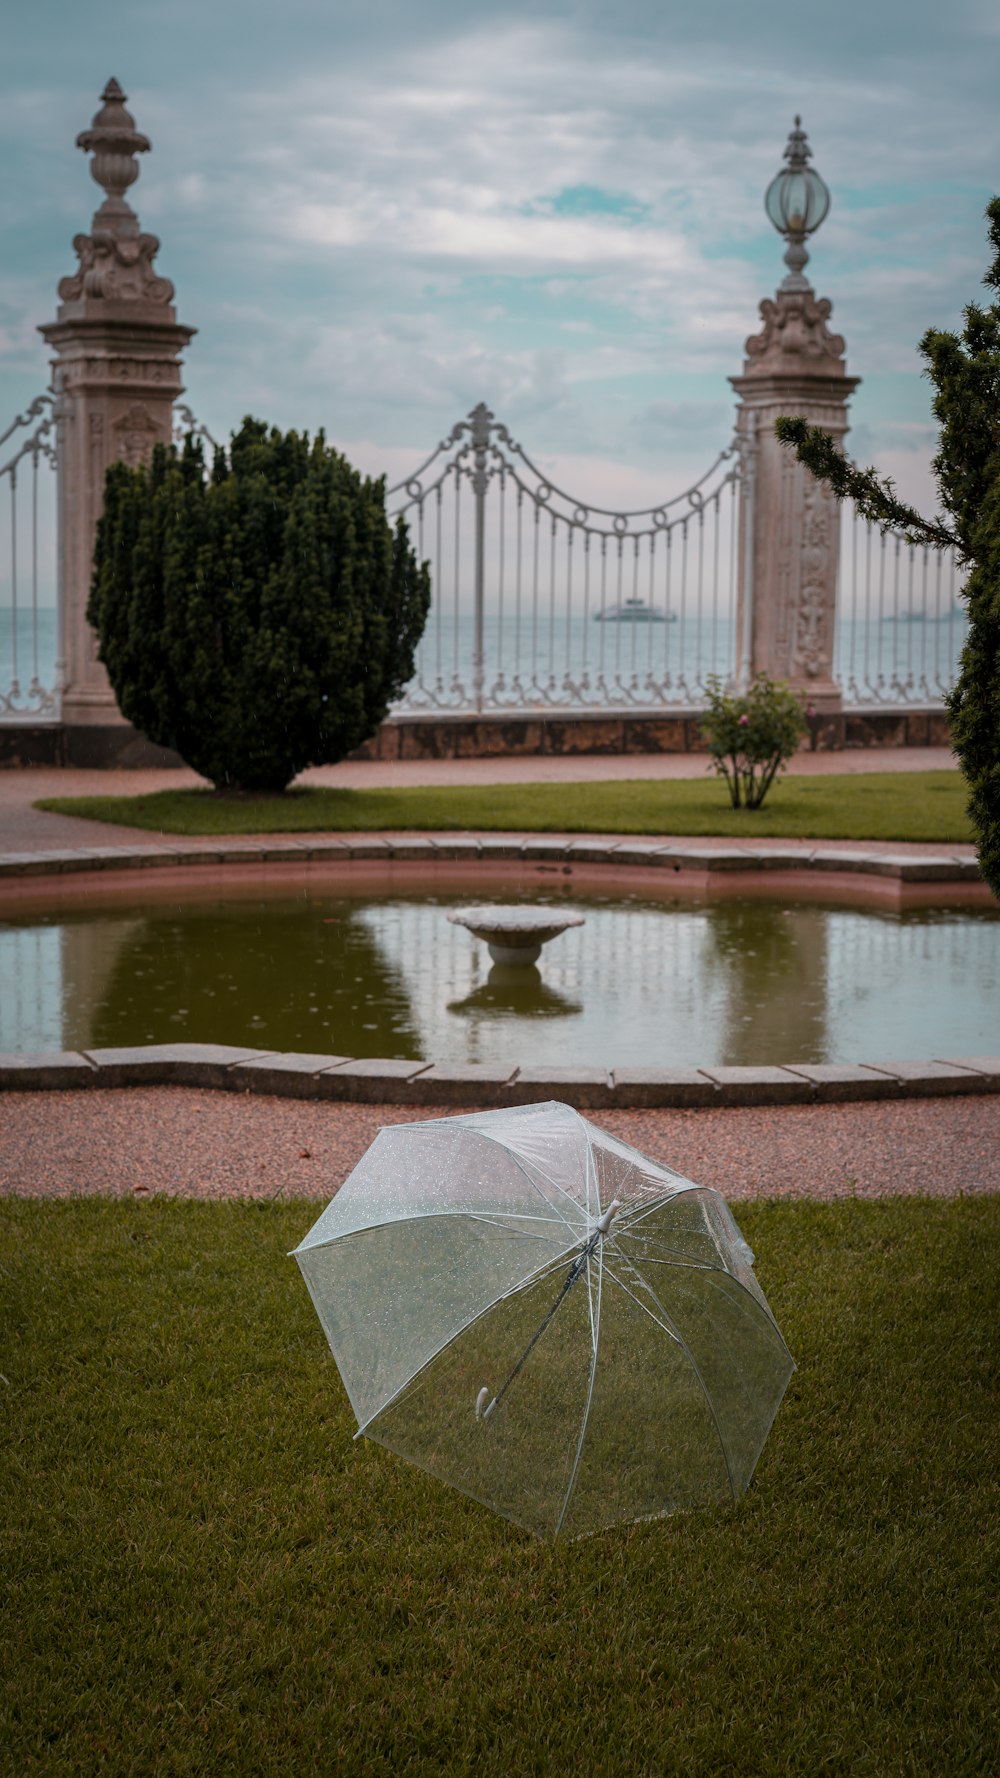 a clear umbrella sitting in the grass near a pond